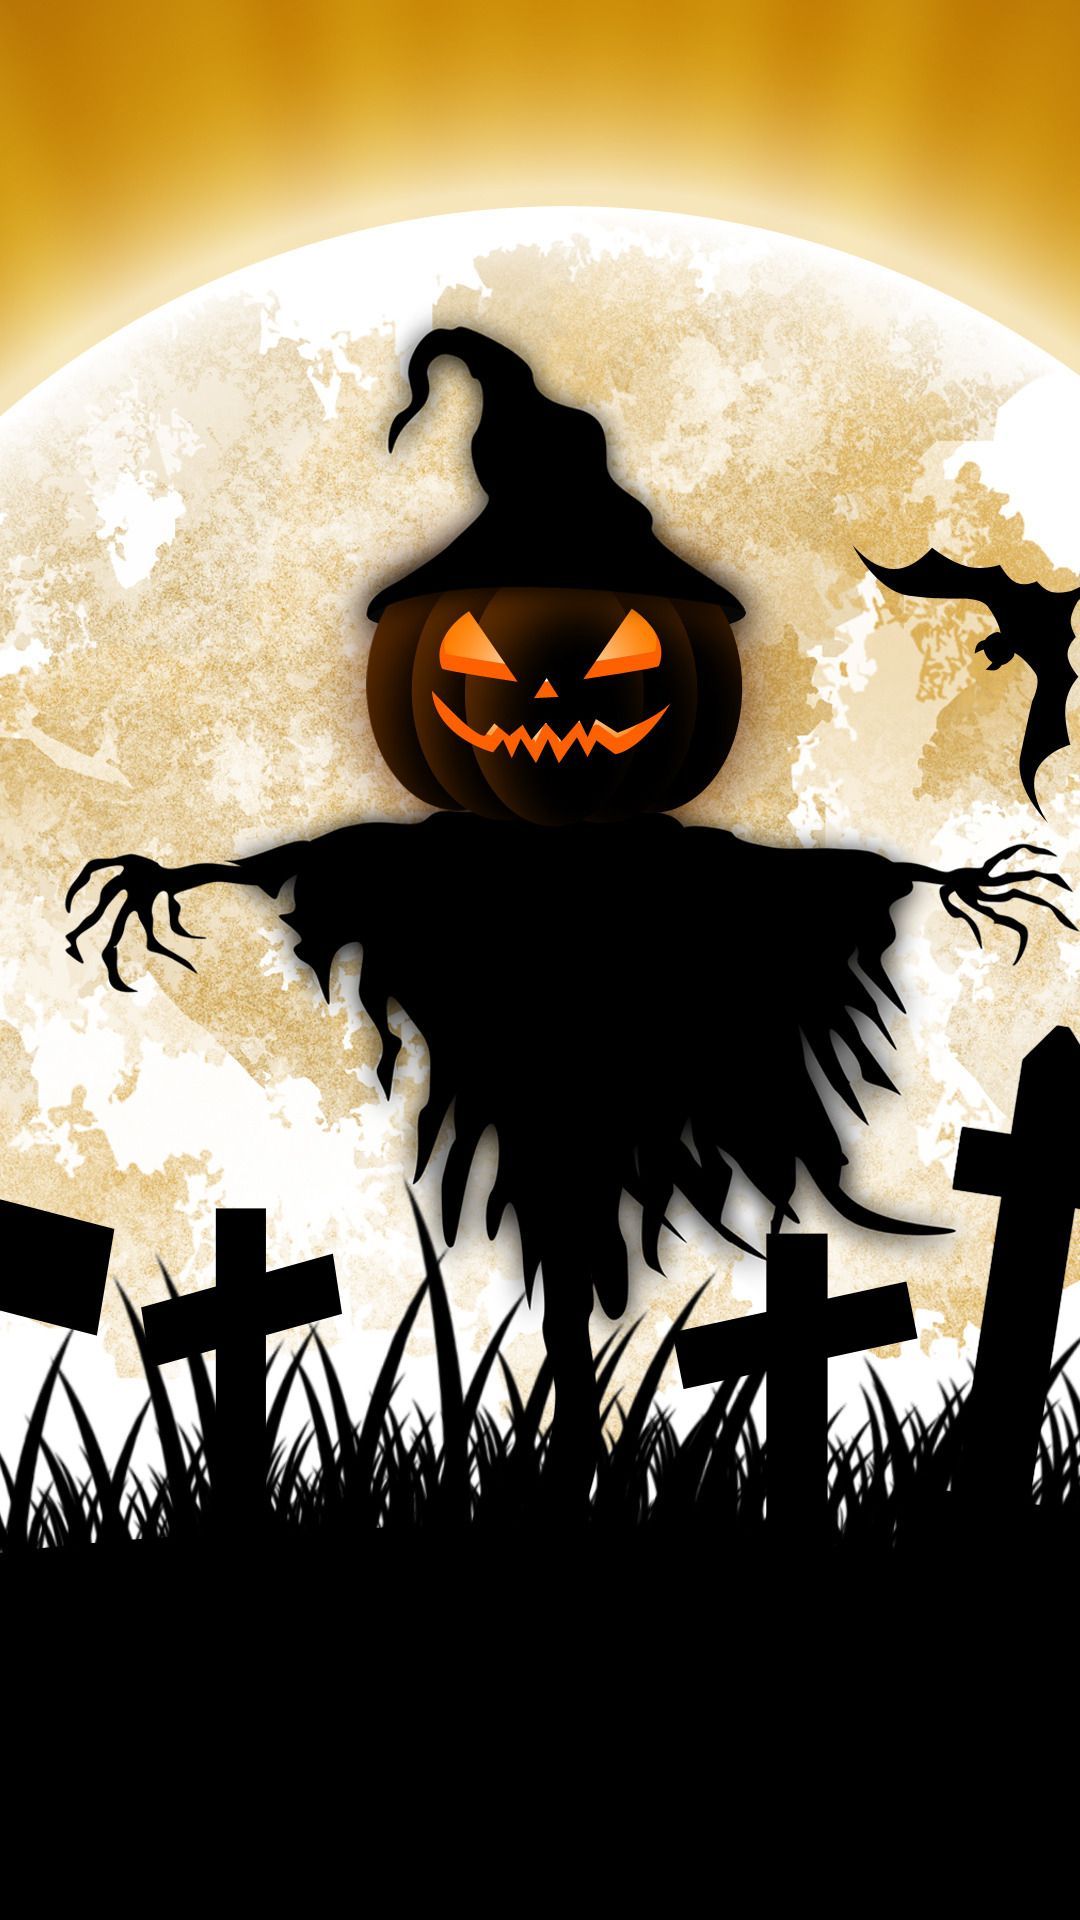 New iPhone Wallpaper. iPhone Wallpaper. Halloween scarecrow, Halloween painting, Halloween wallpaper